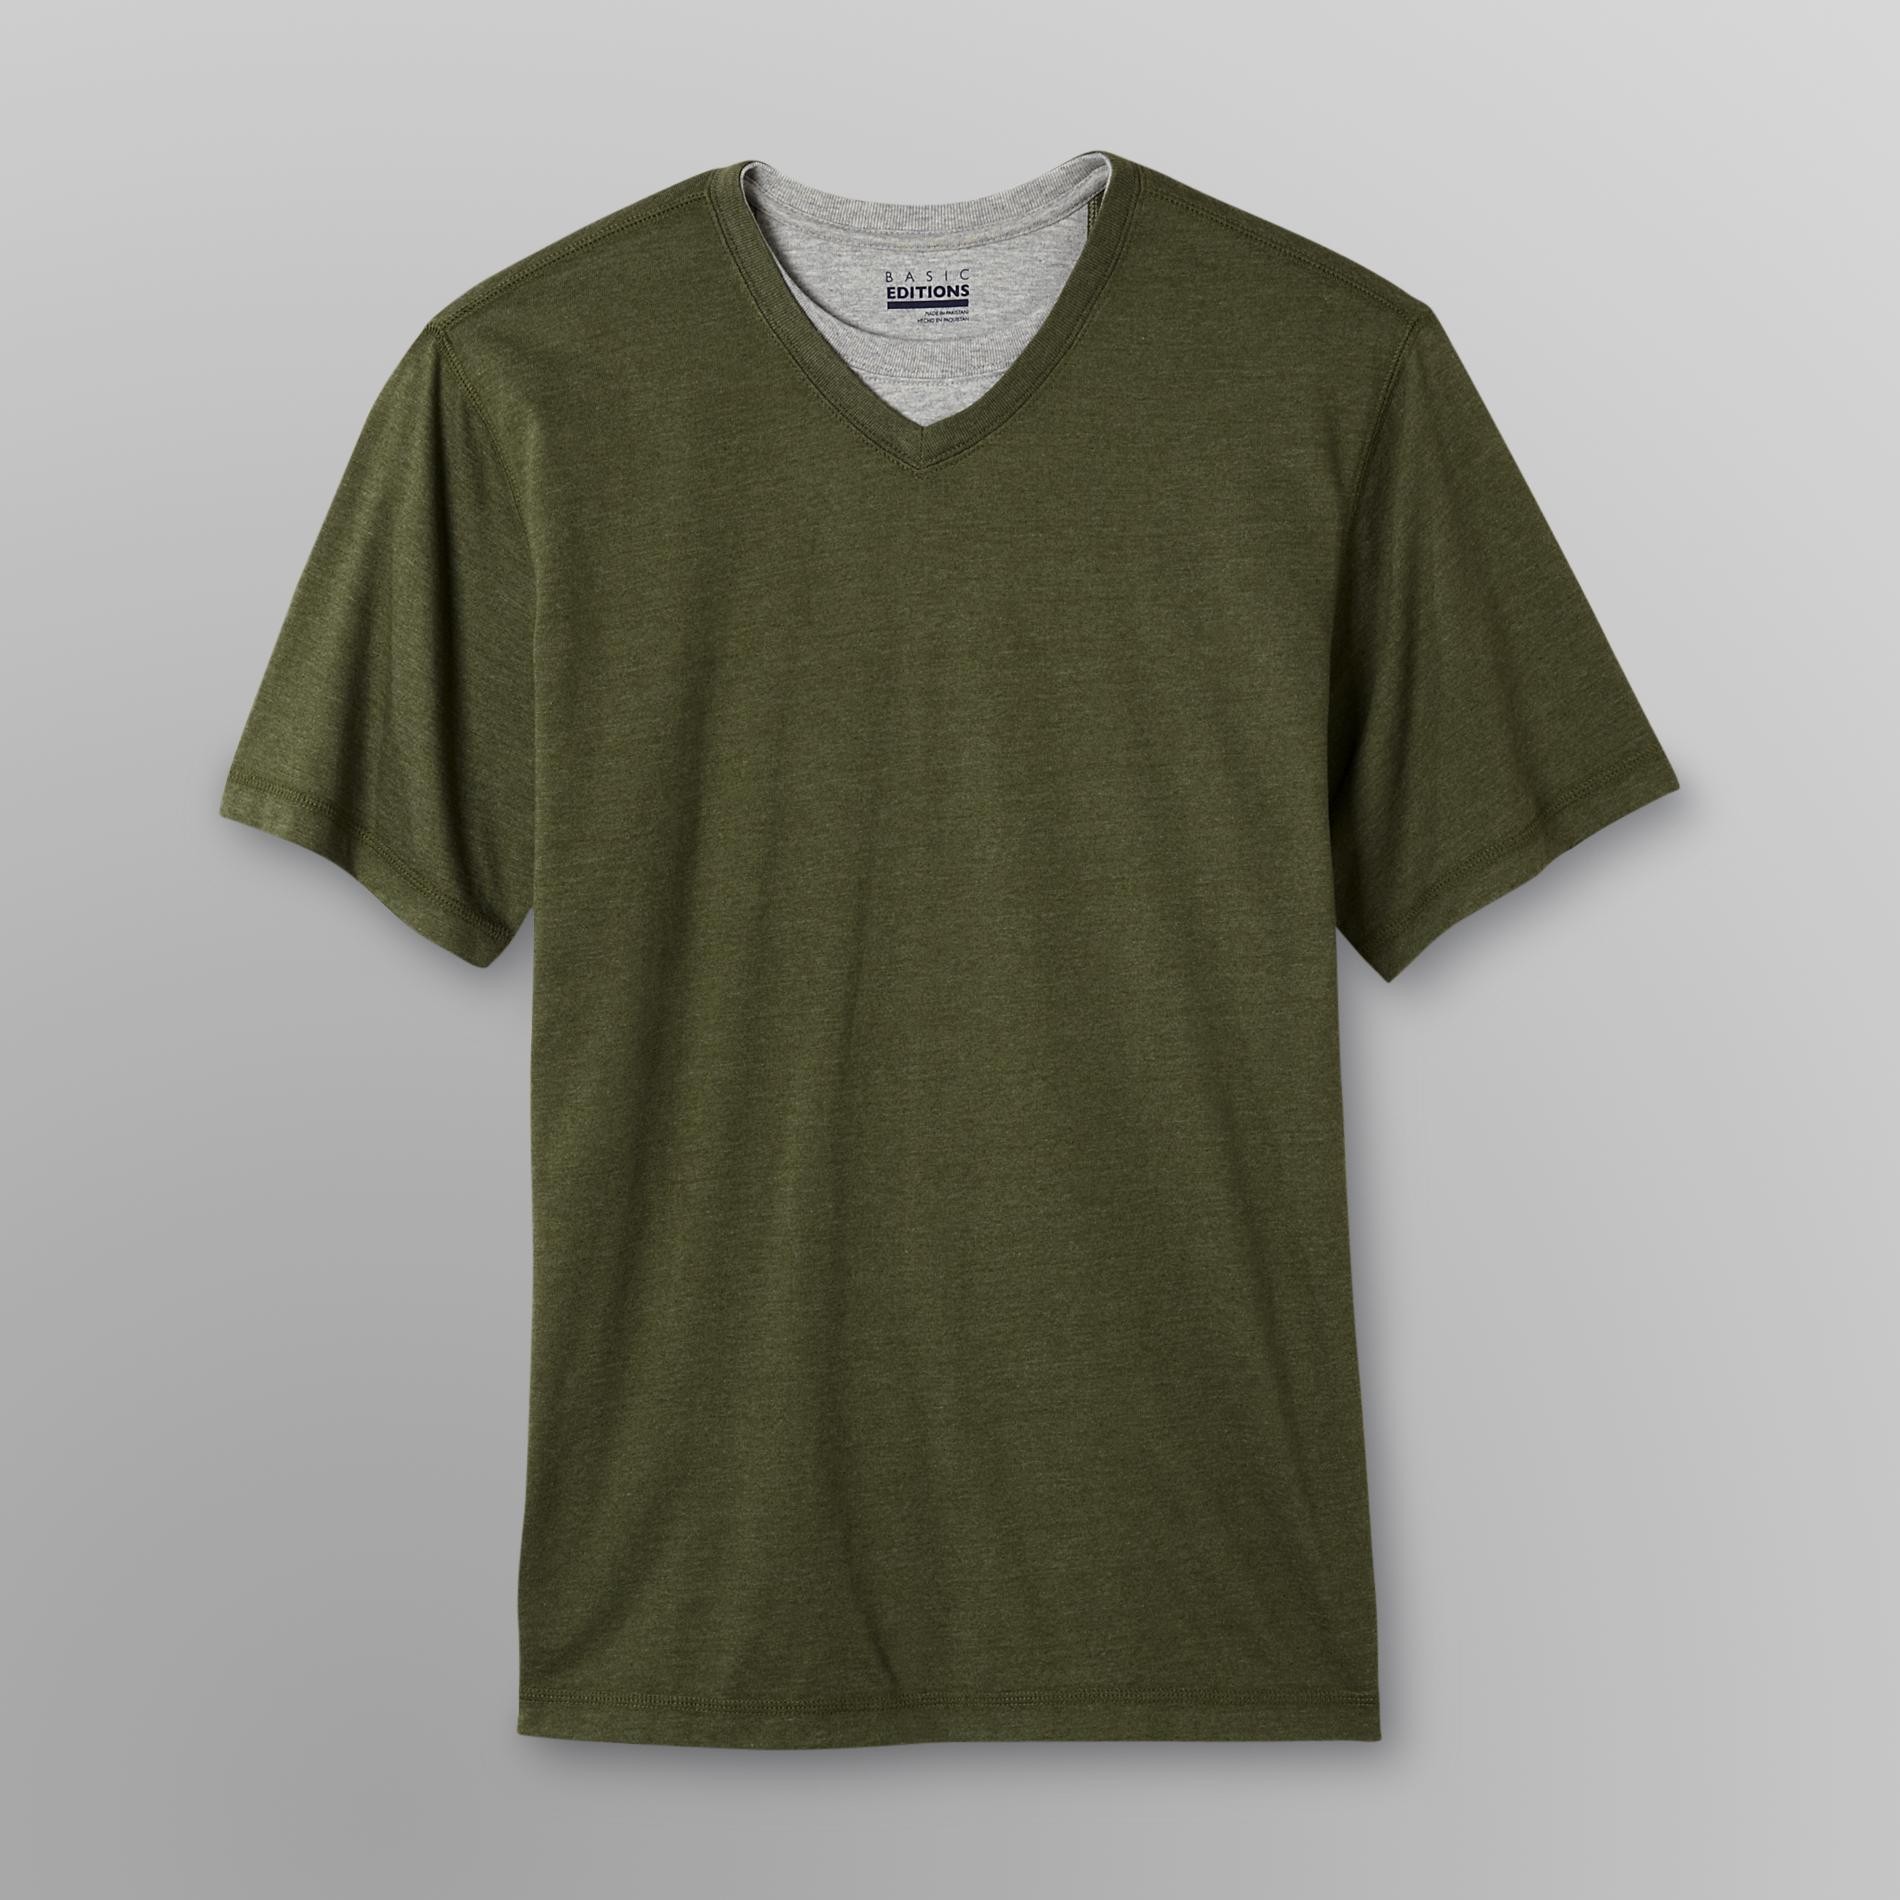 Basic Editions Men's Big & Tall Layered V-Neck T-Shirt